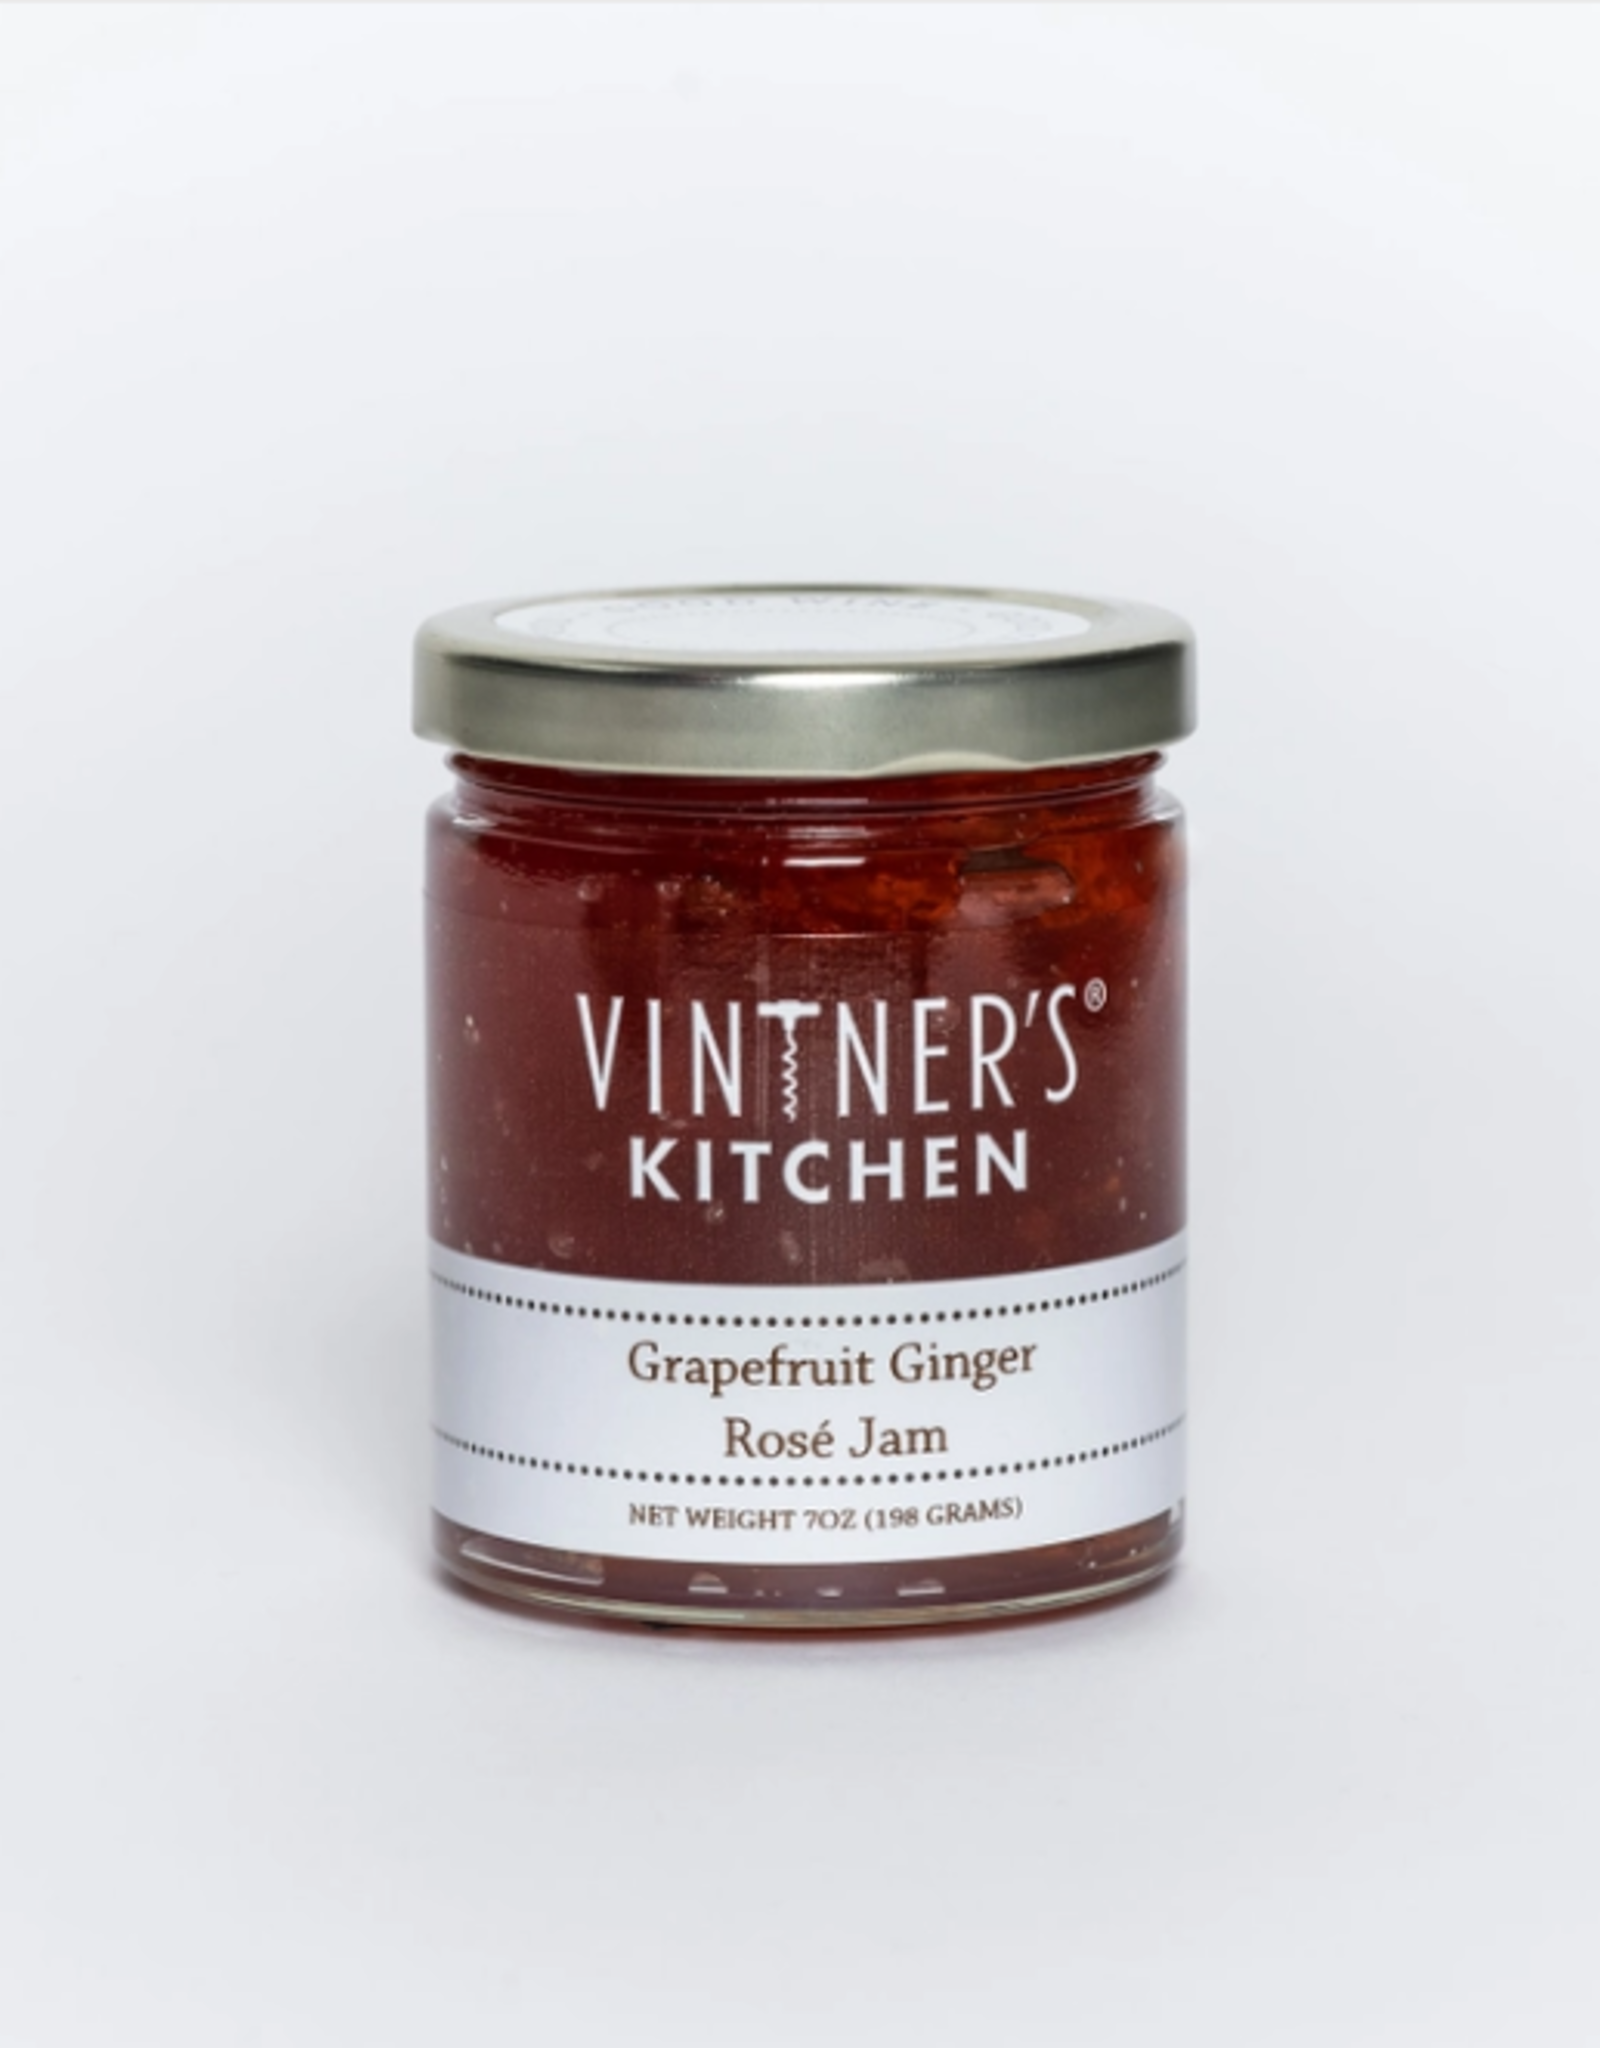 Vintner's Kitchen Grapefruit Ginger Rose Jam